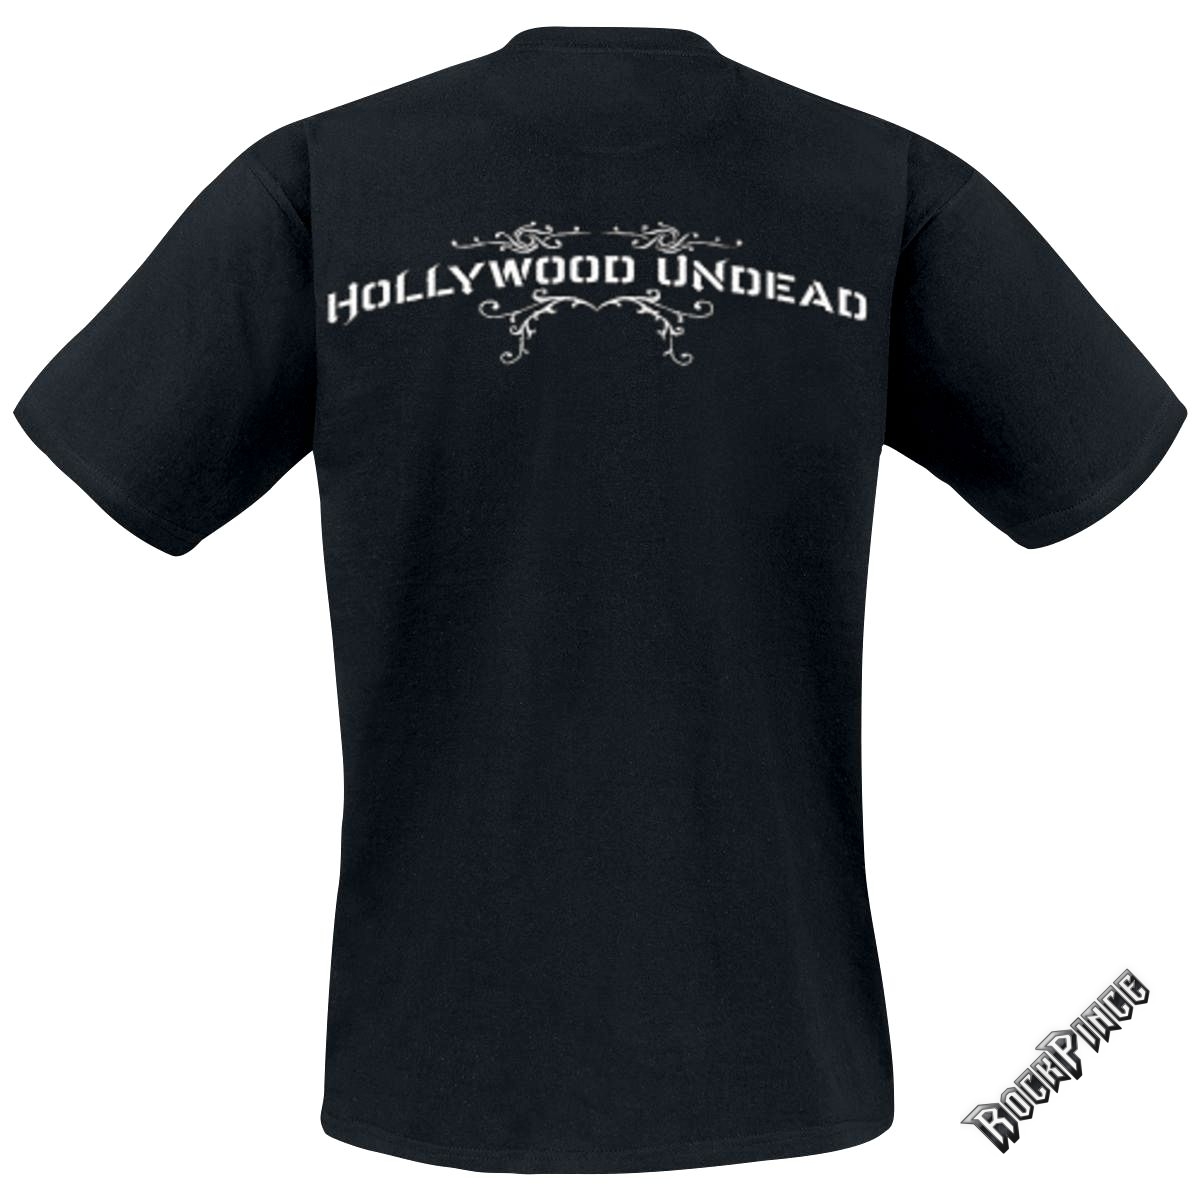 Hollywood Undead - Day of the Dead - UNISEX PÓLÓ